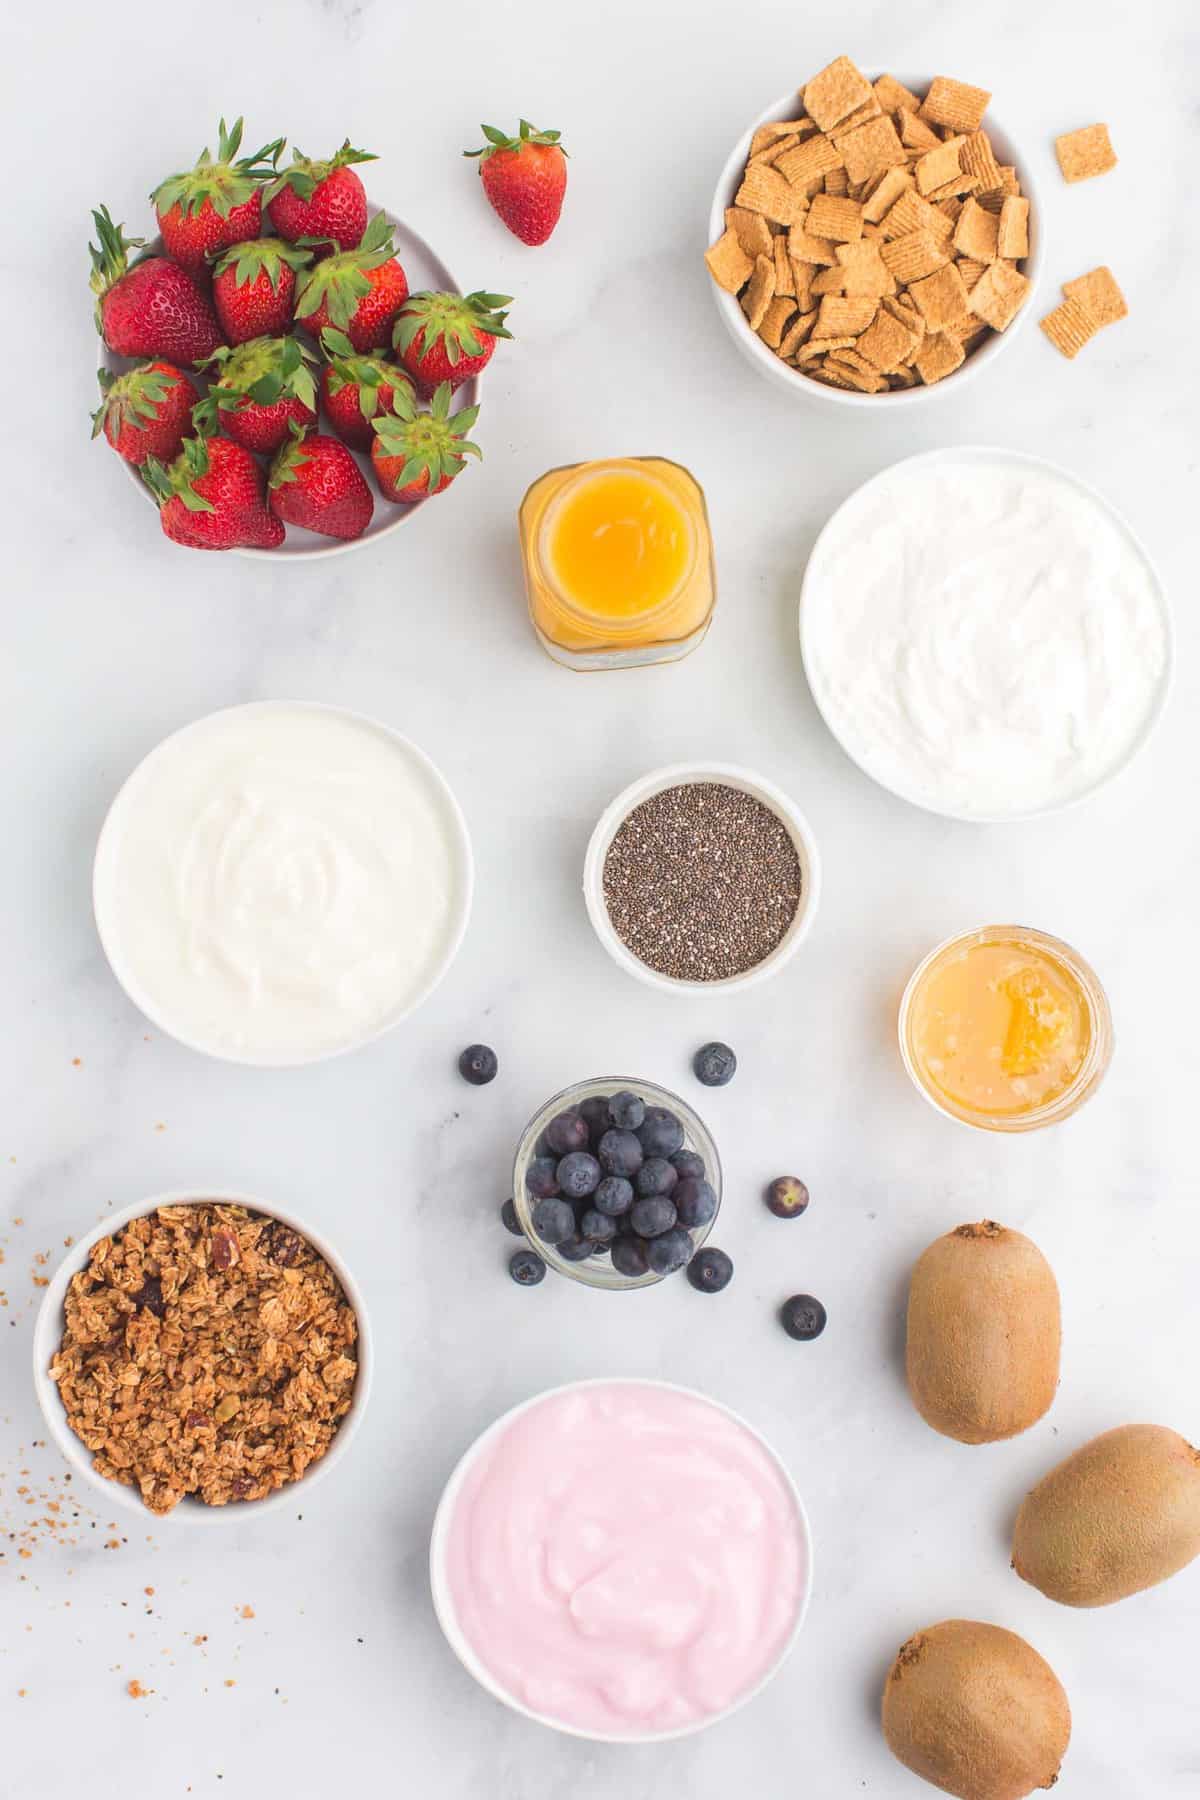 Assortment of ingredients needed, including three types of yogurt.